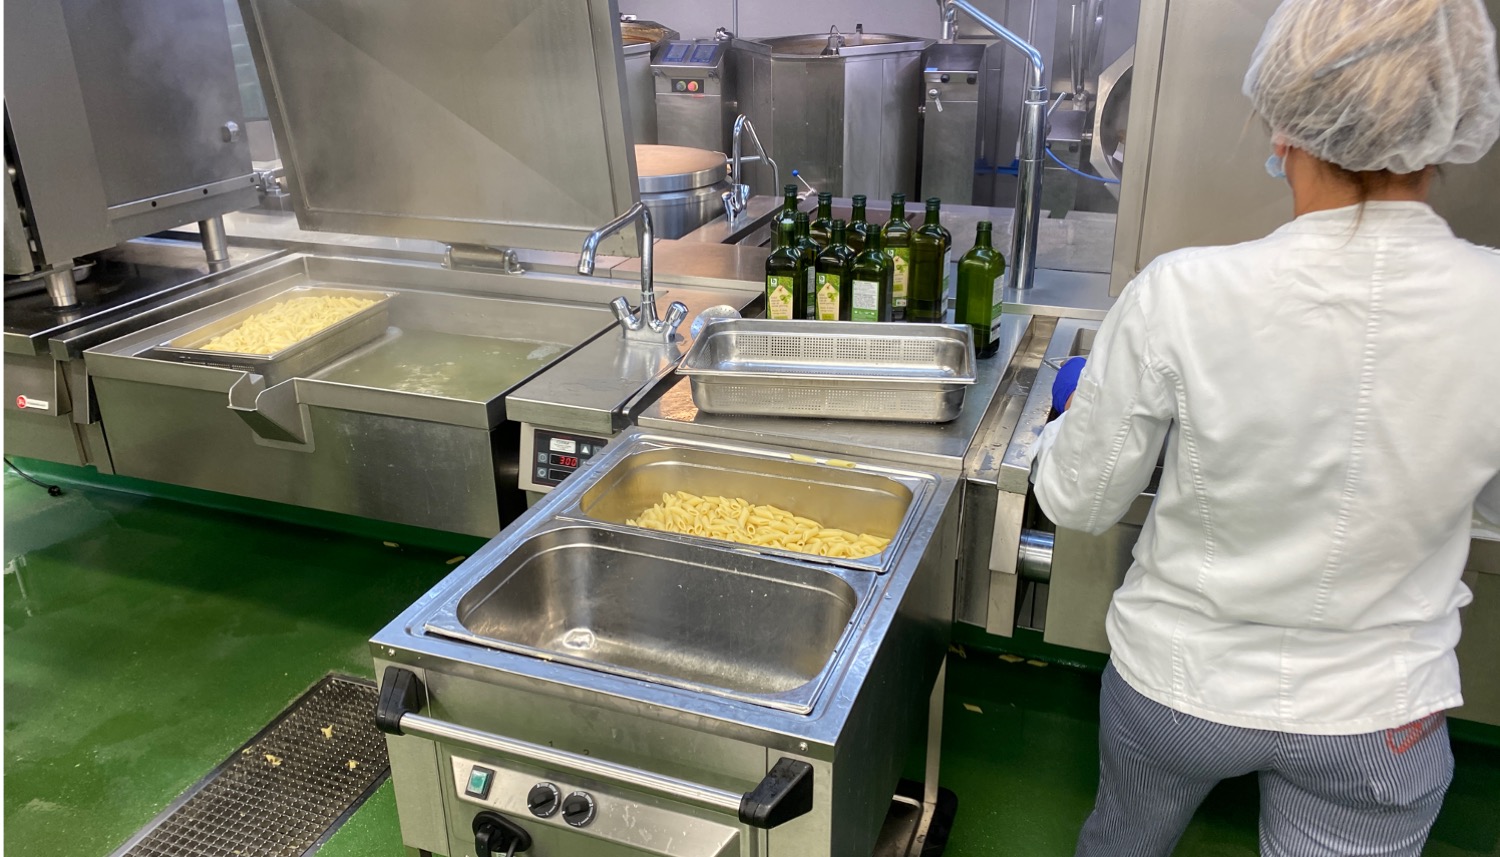 ISoSL inter-municipal association central kitchen preparing 12,000 meals per day (Photo credit, Strategic Design Scenarios)